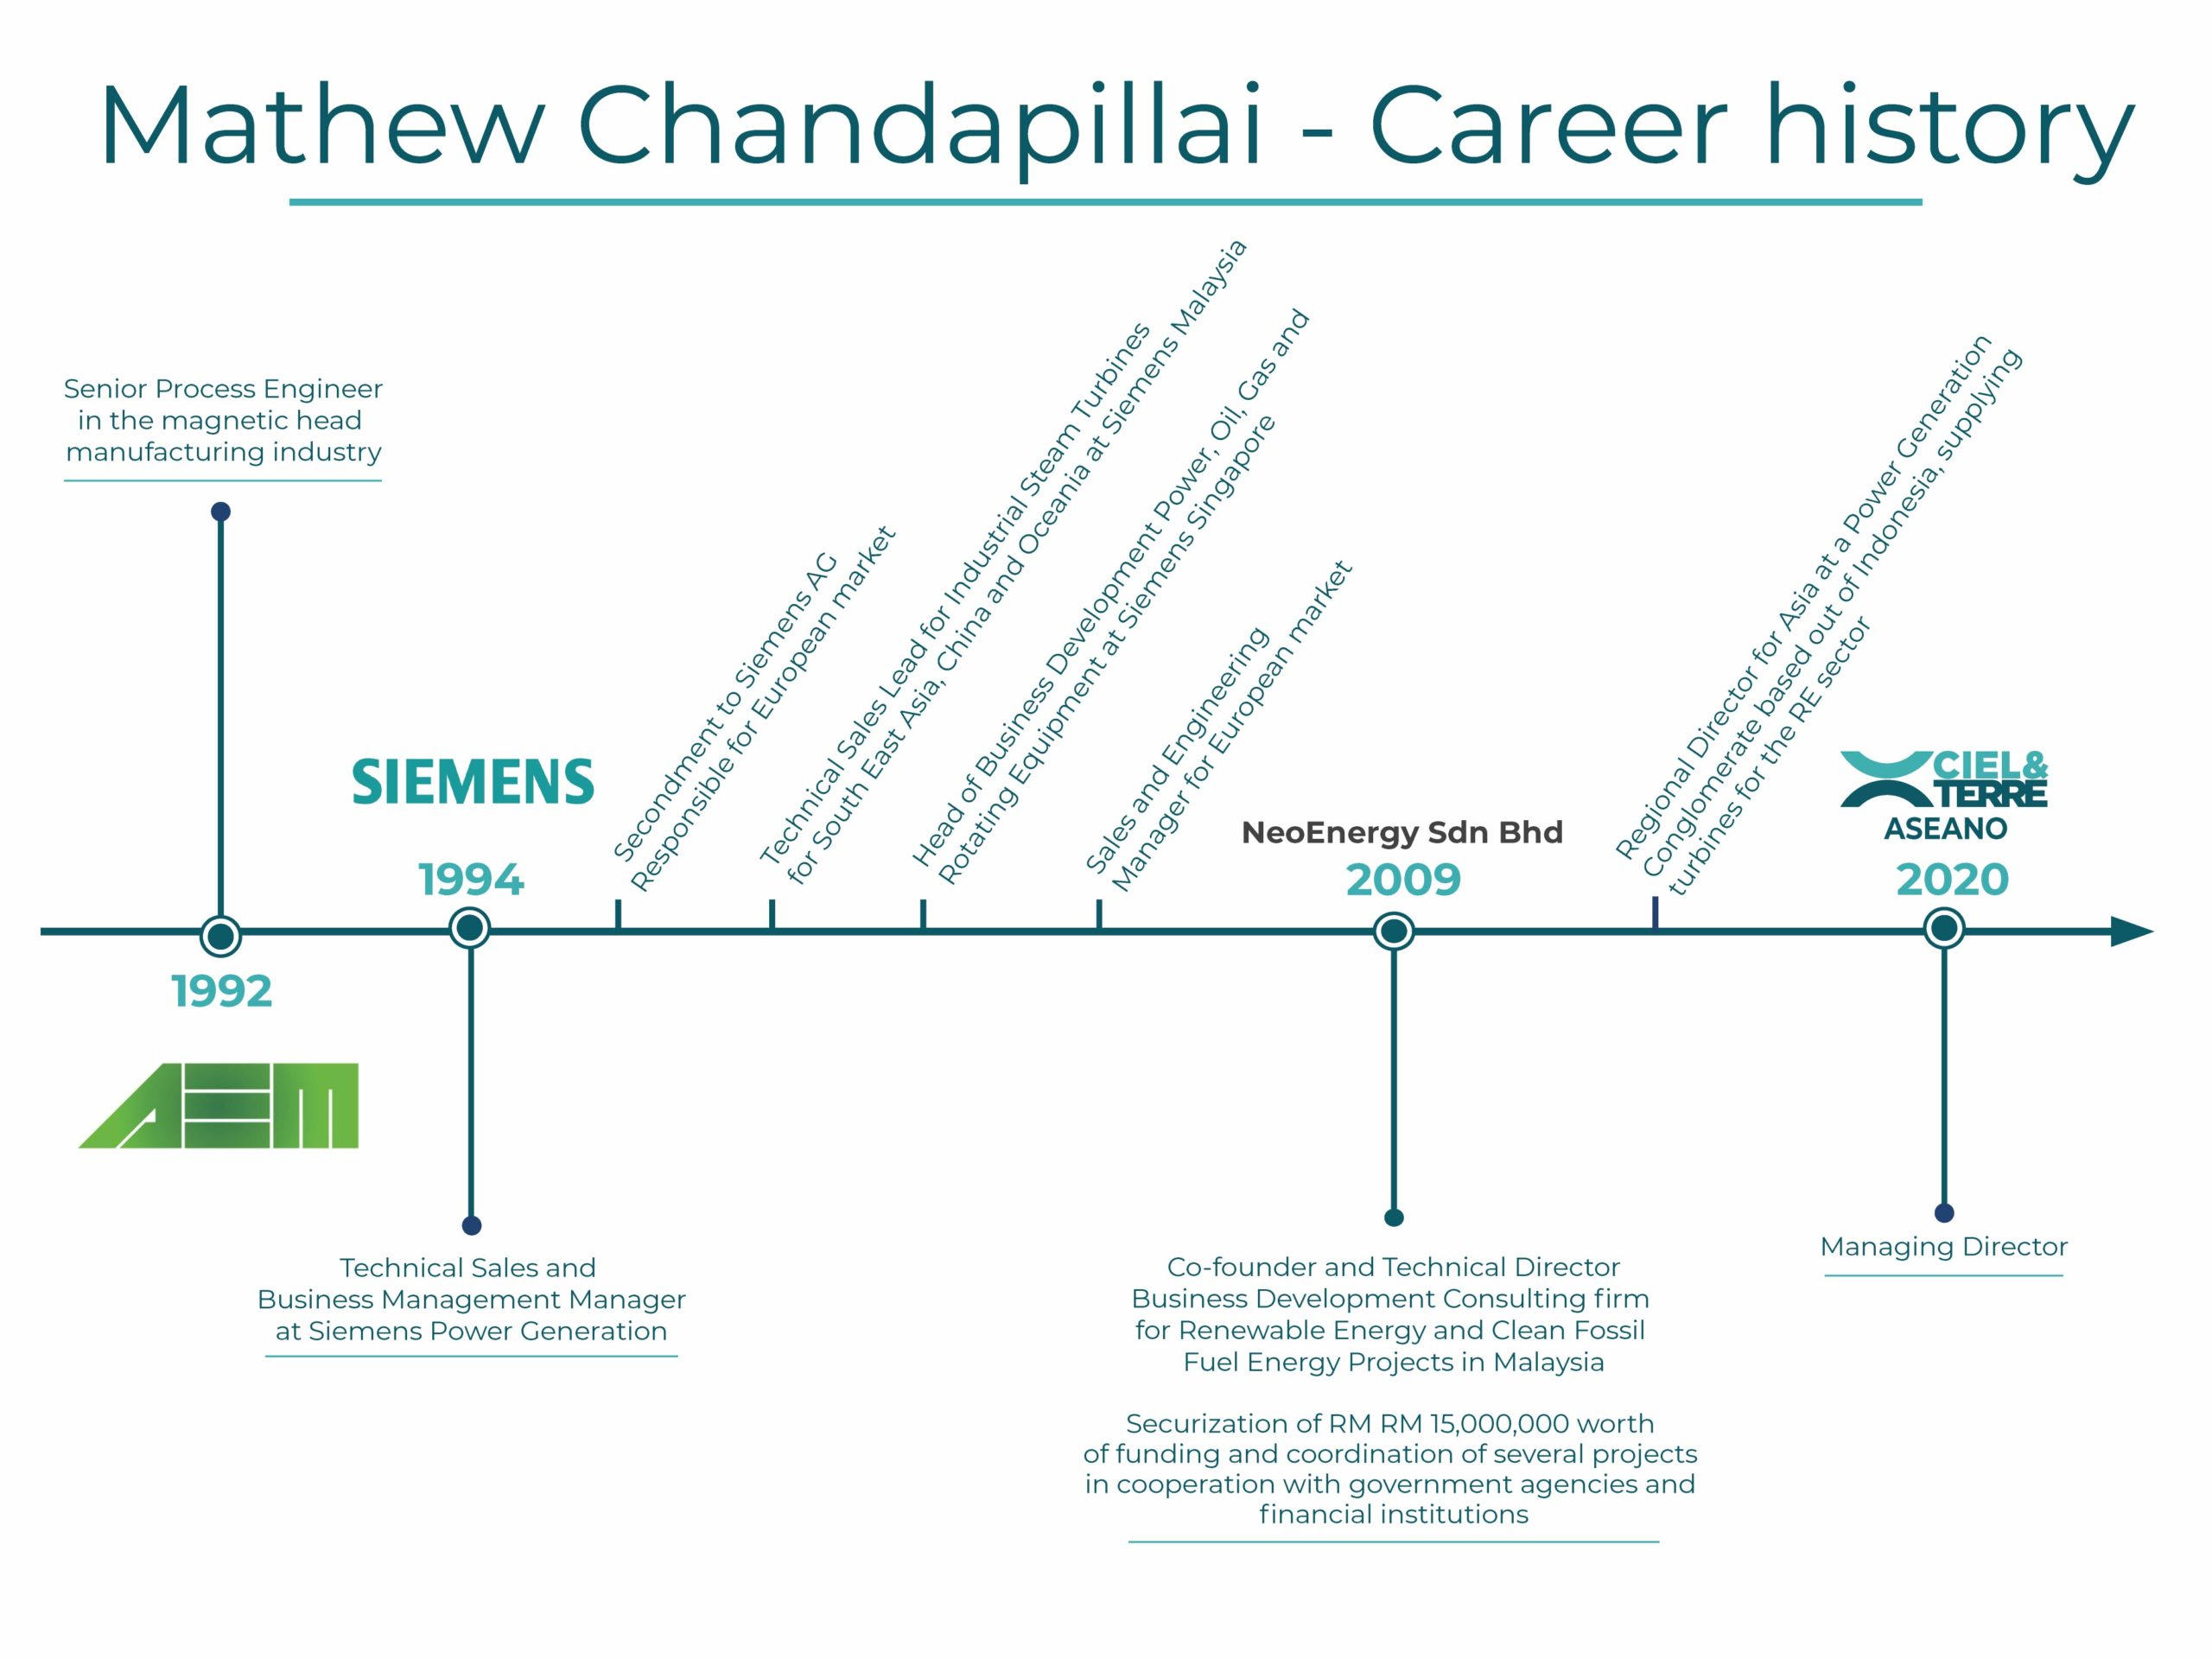 Mathew Chandapillai's career journey CEO of Ciel et Terre ASEANO